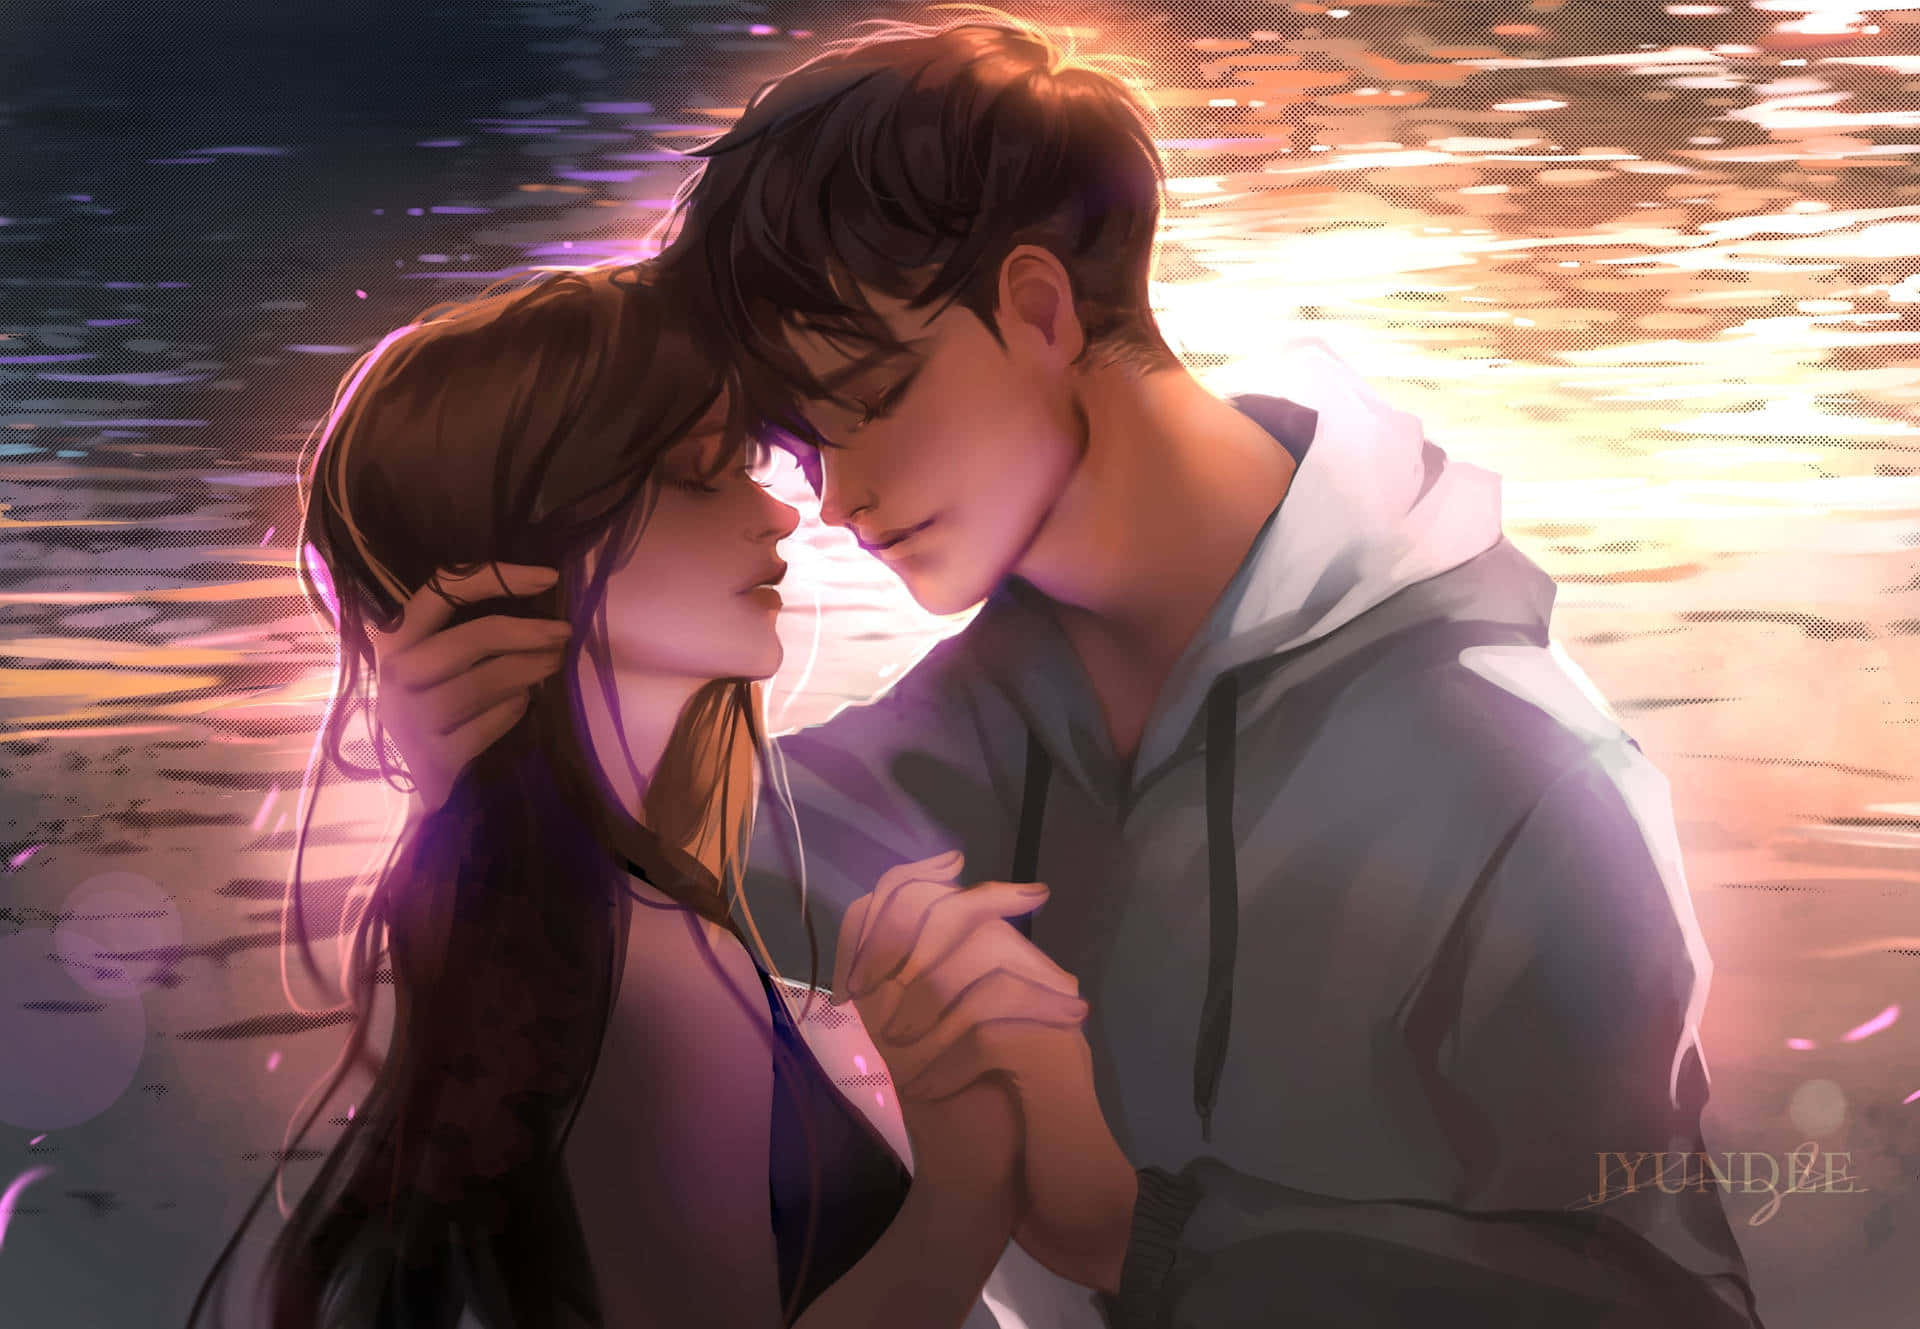 A romantic anime couple embracing Wallpaper